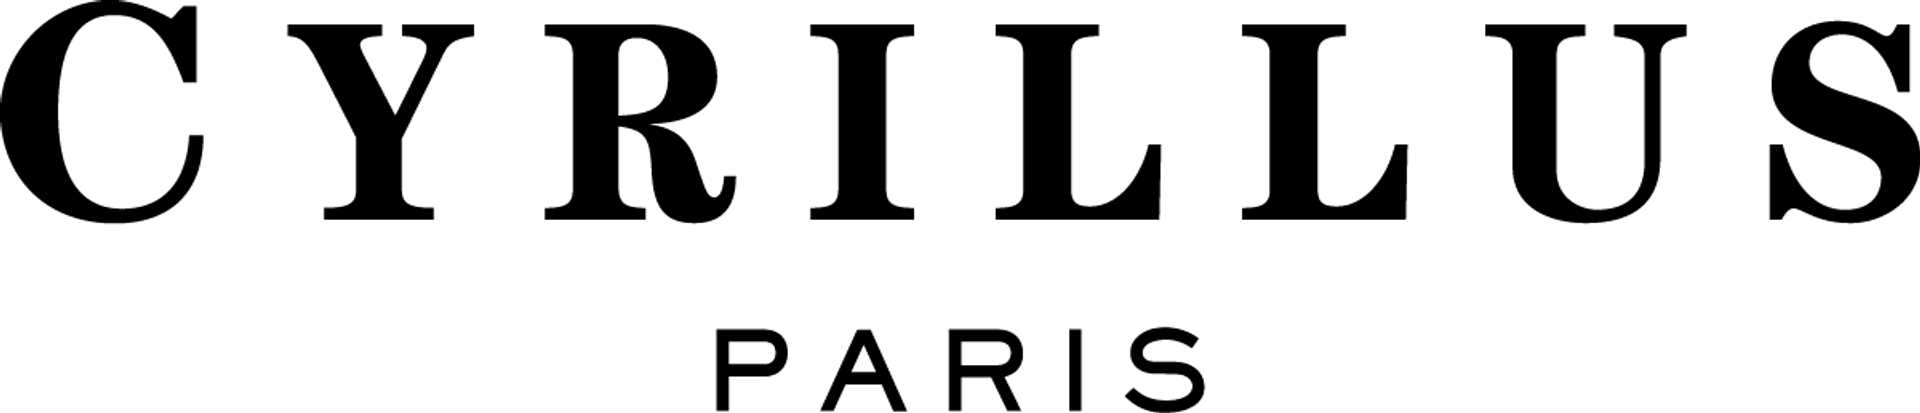 CYRILLUS logo du catalogue